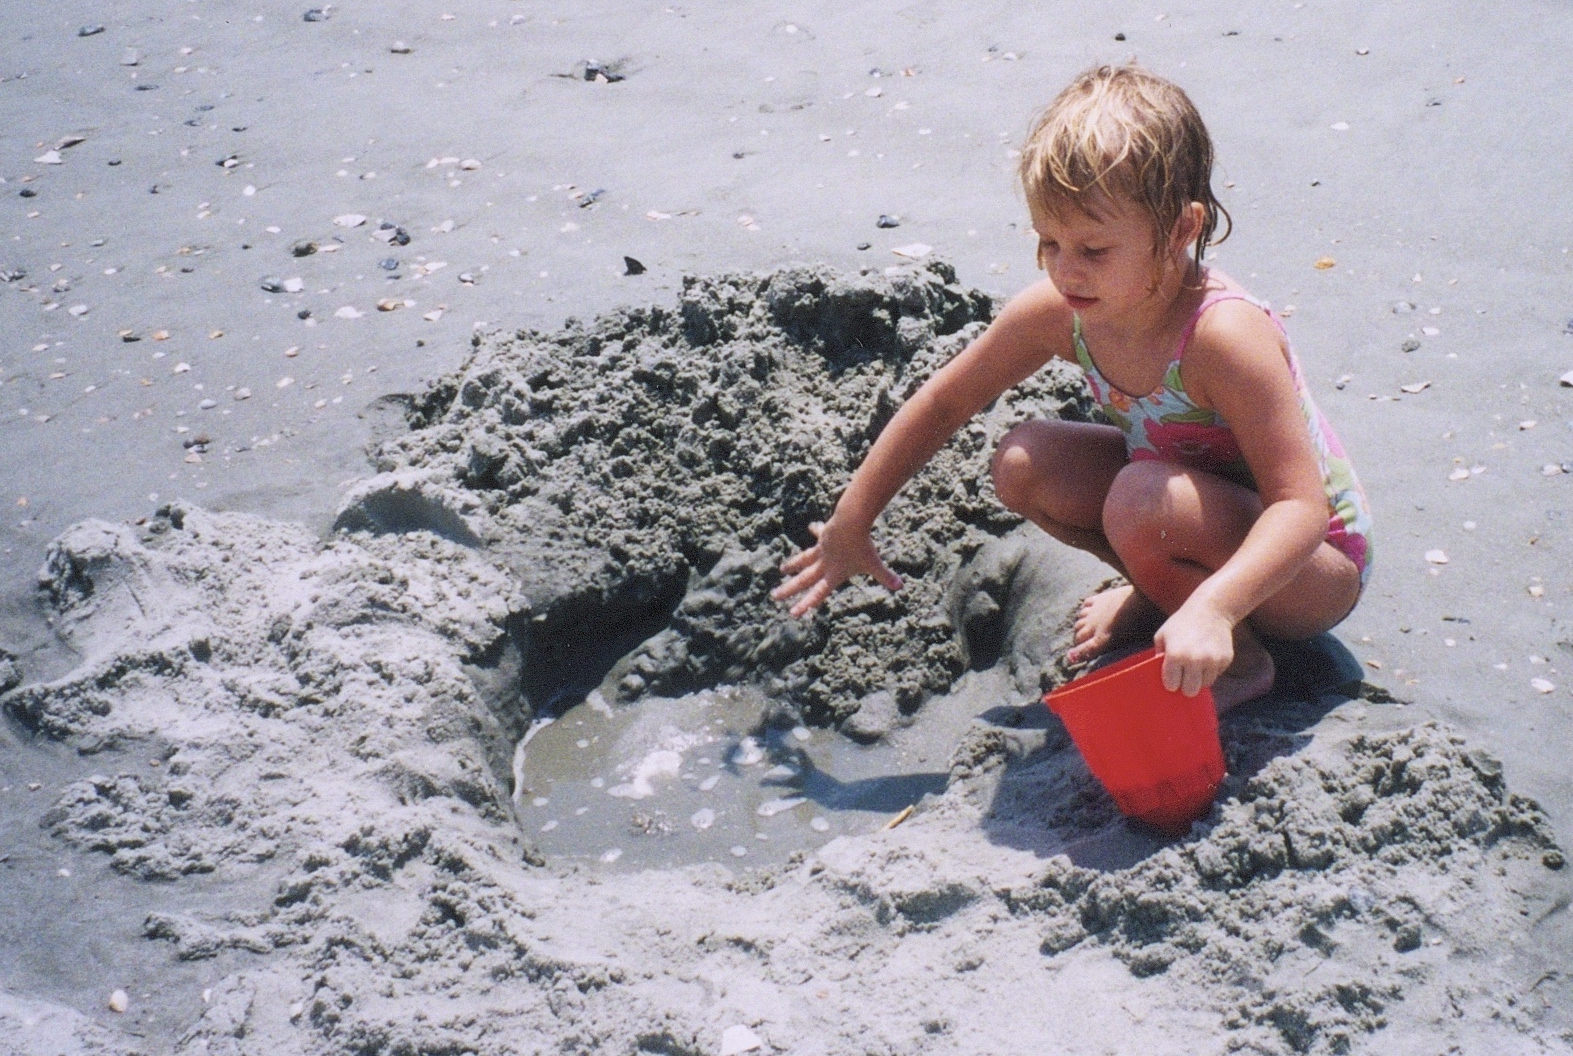 Taylor building sand castles